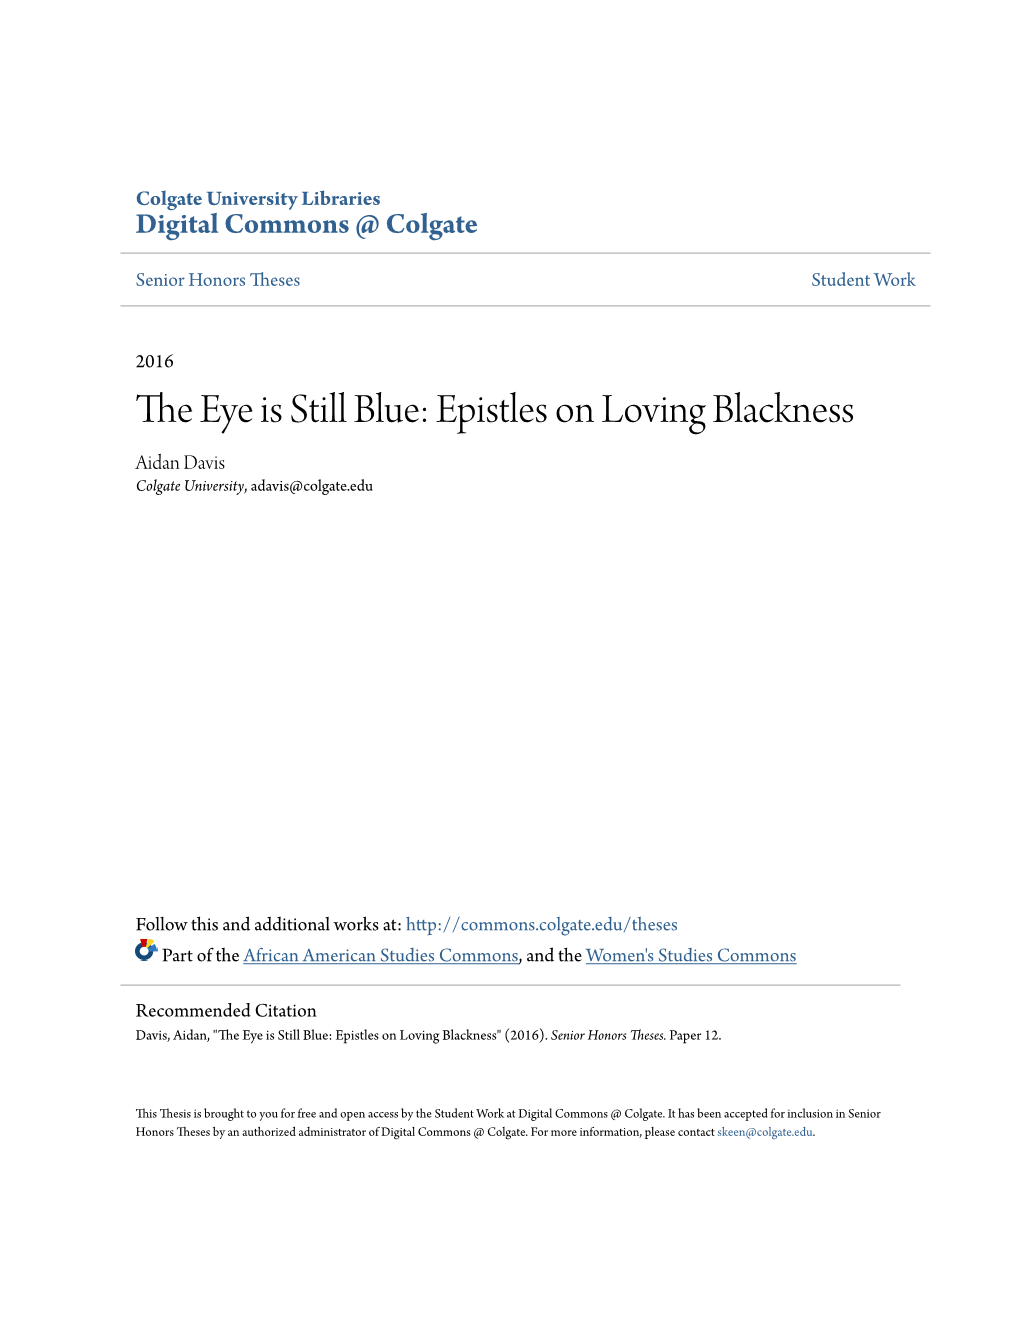 The Eye Is Still Blue: Epistles on Loving Blackness